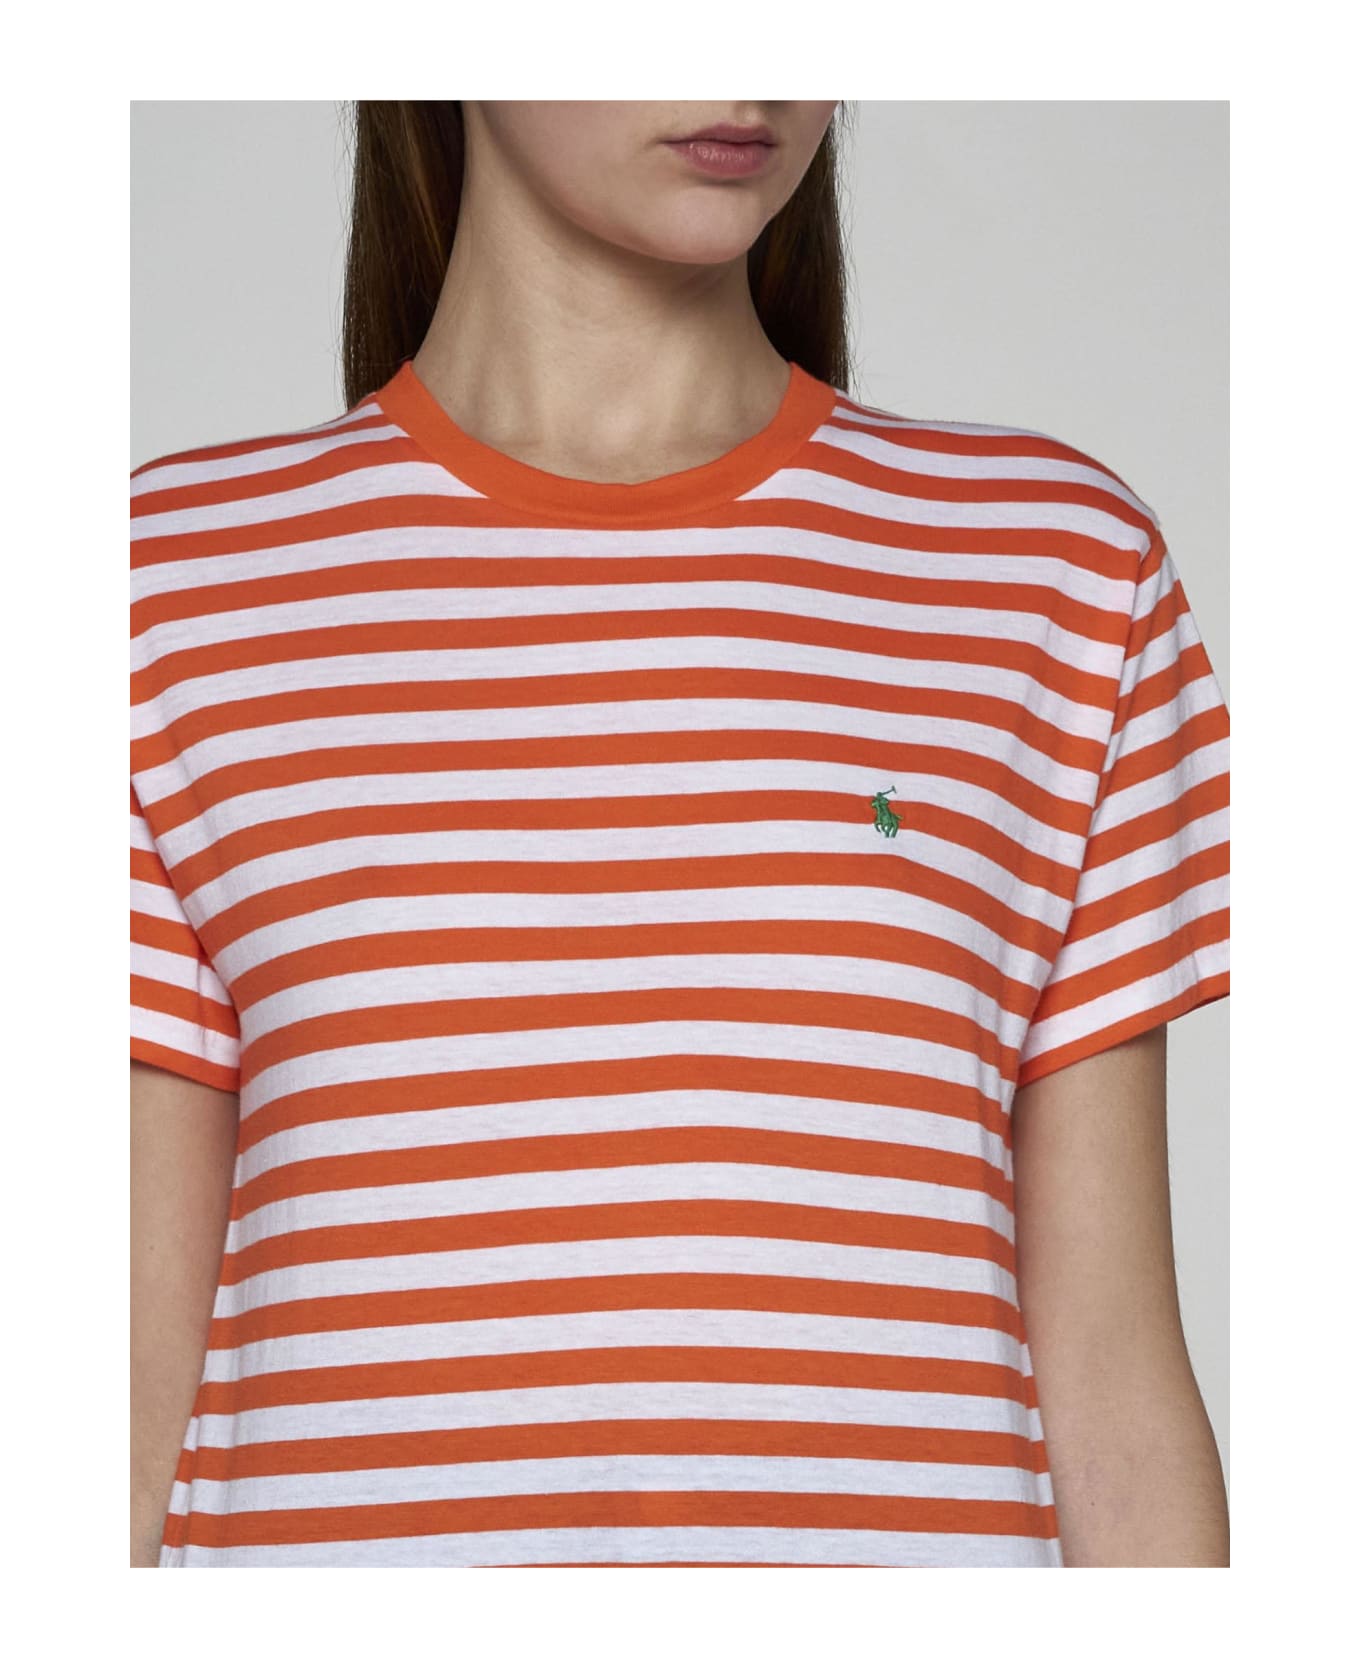 Polo Ralph Lauren Striped Cotton T-shirt - Orange Tシャツ